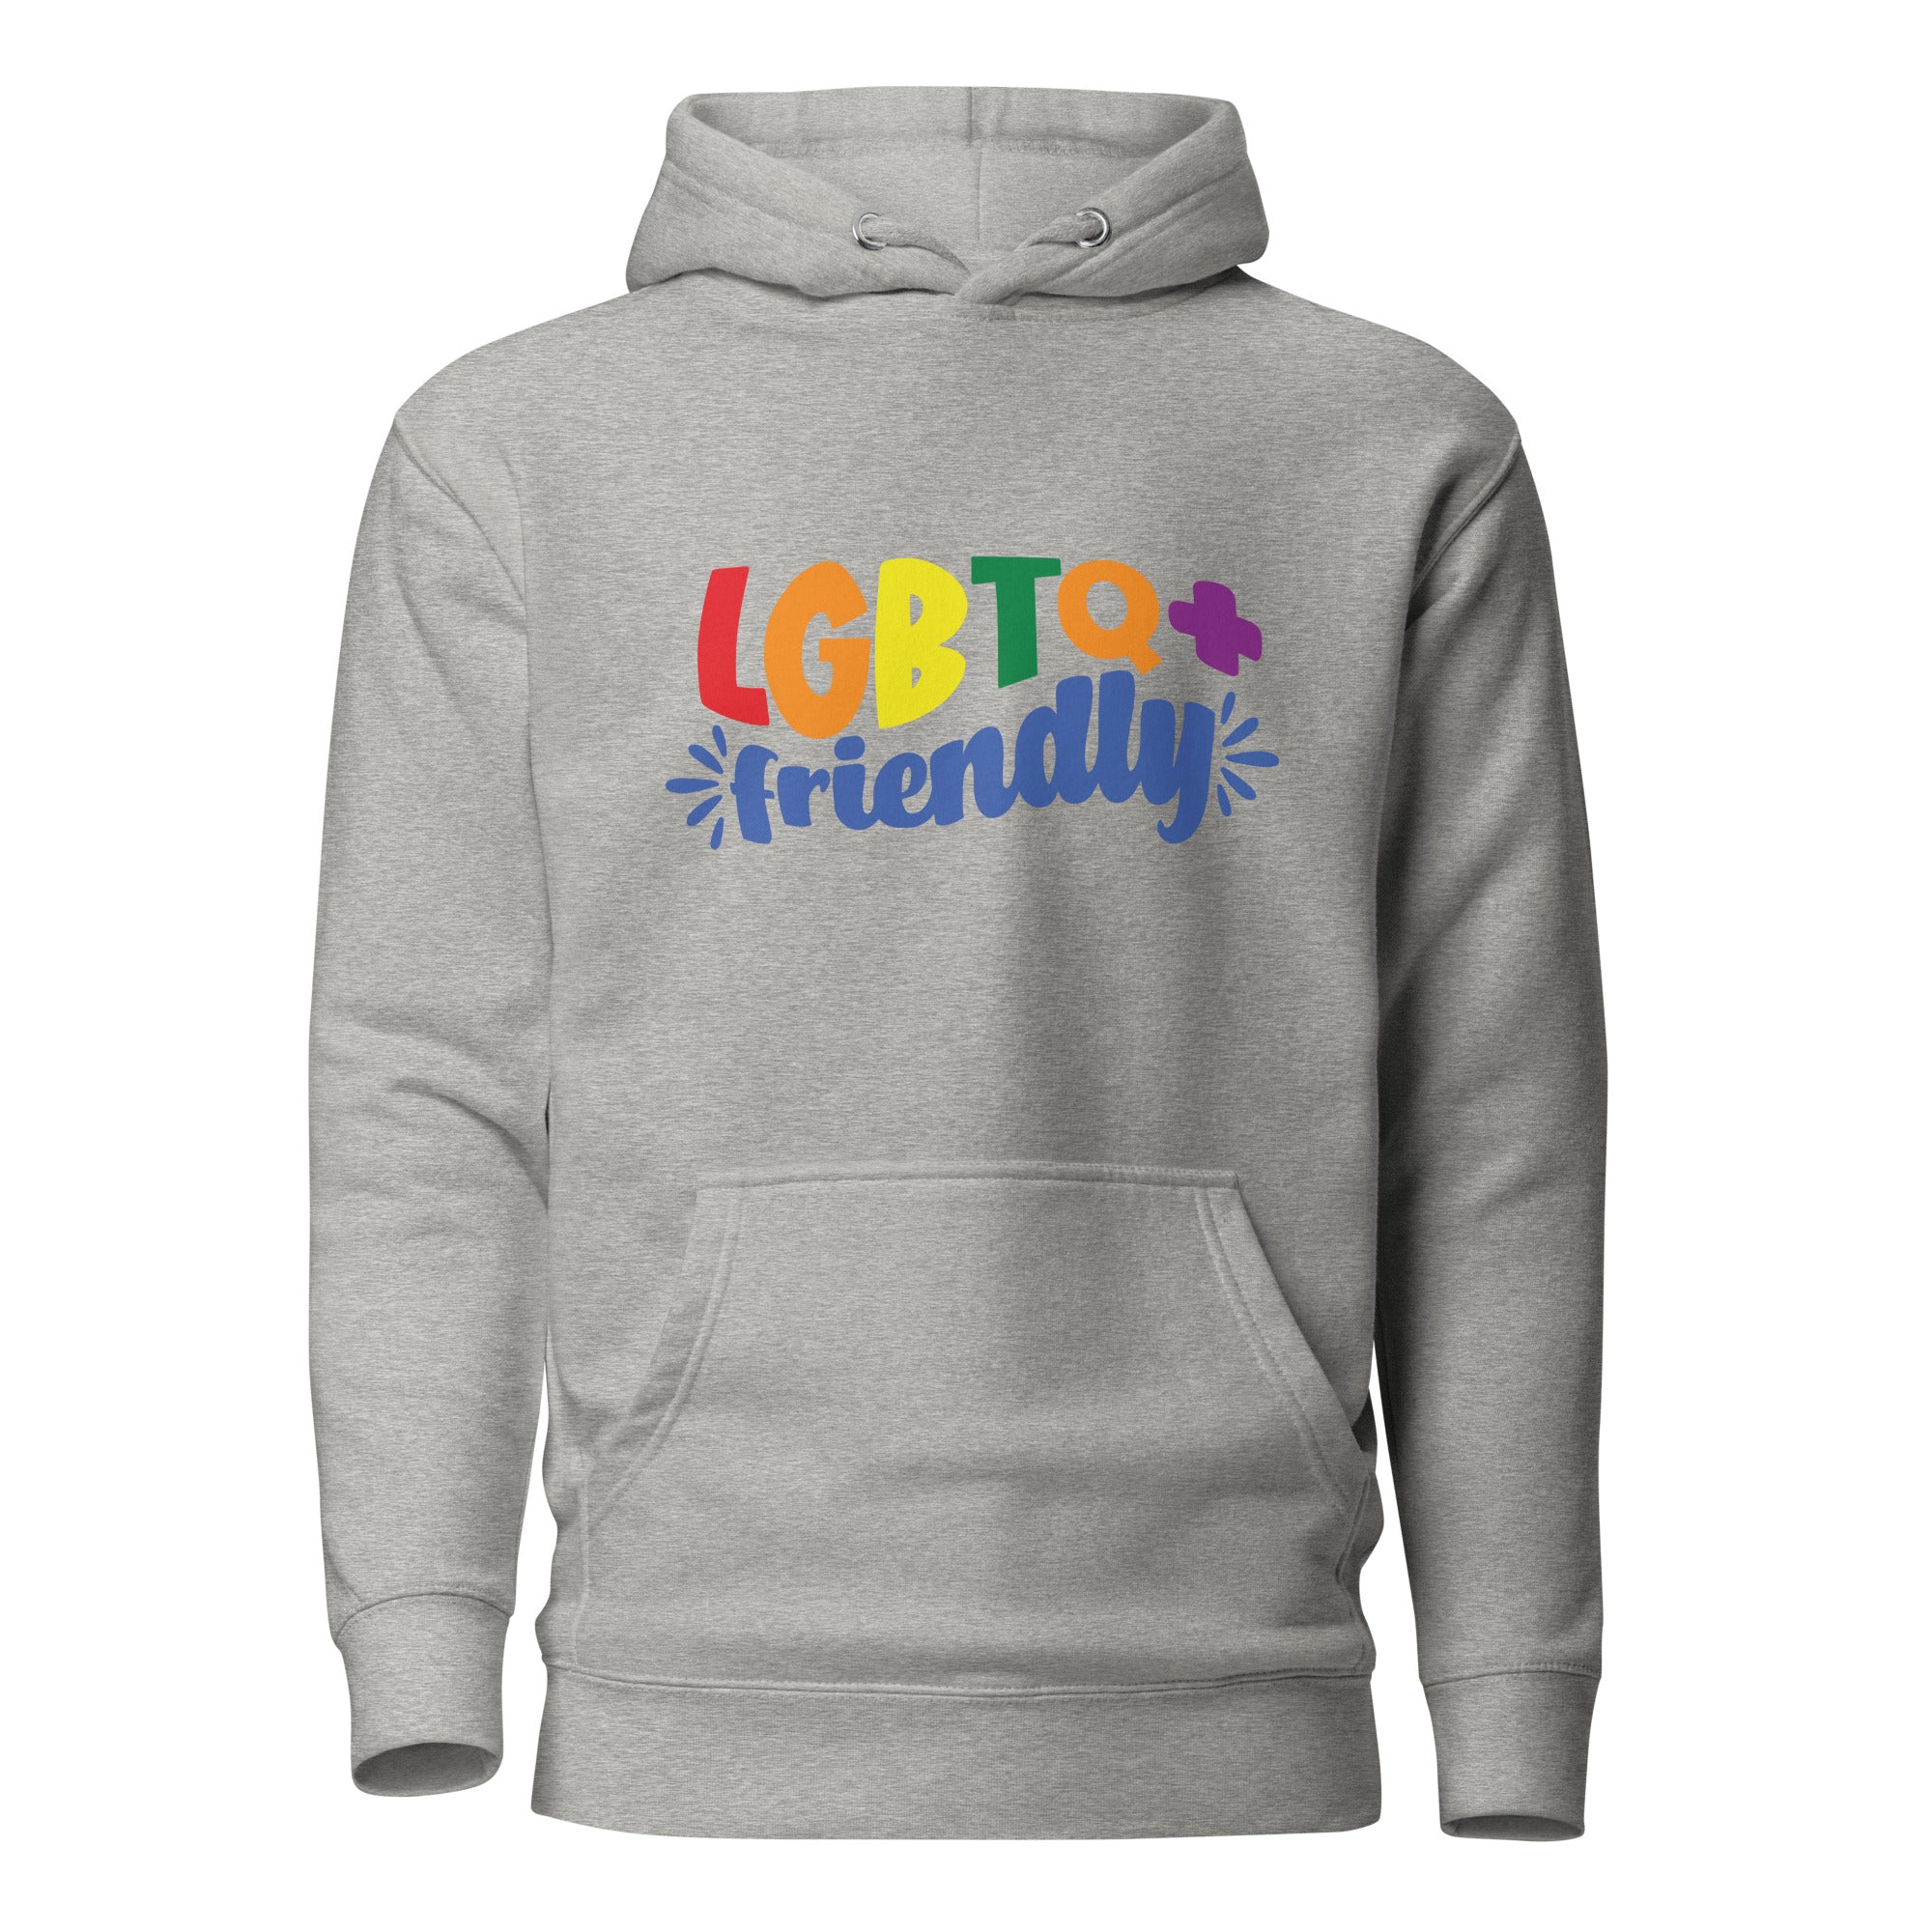 Unisex Hoodie- LGBTQ+ friendly